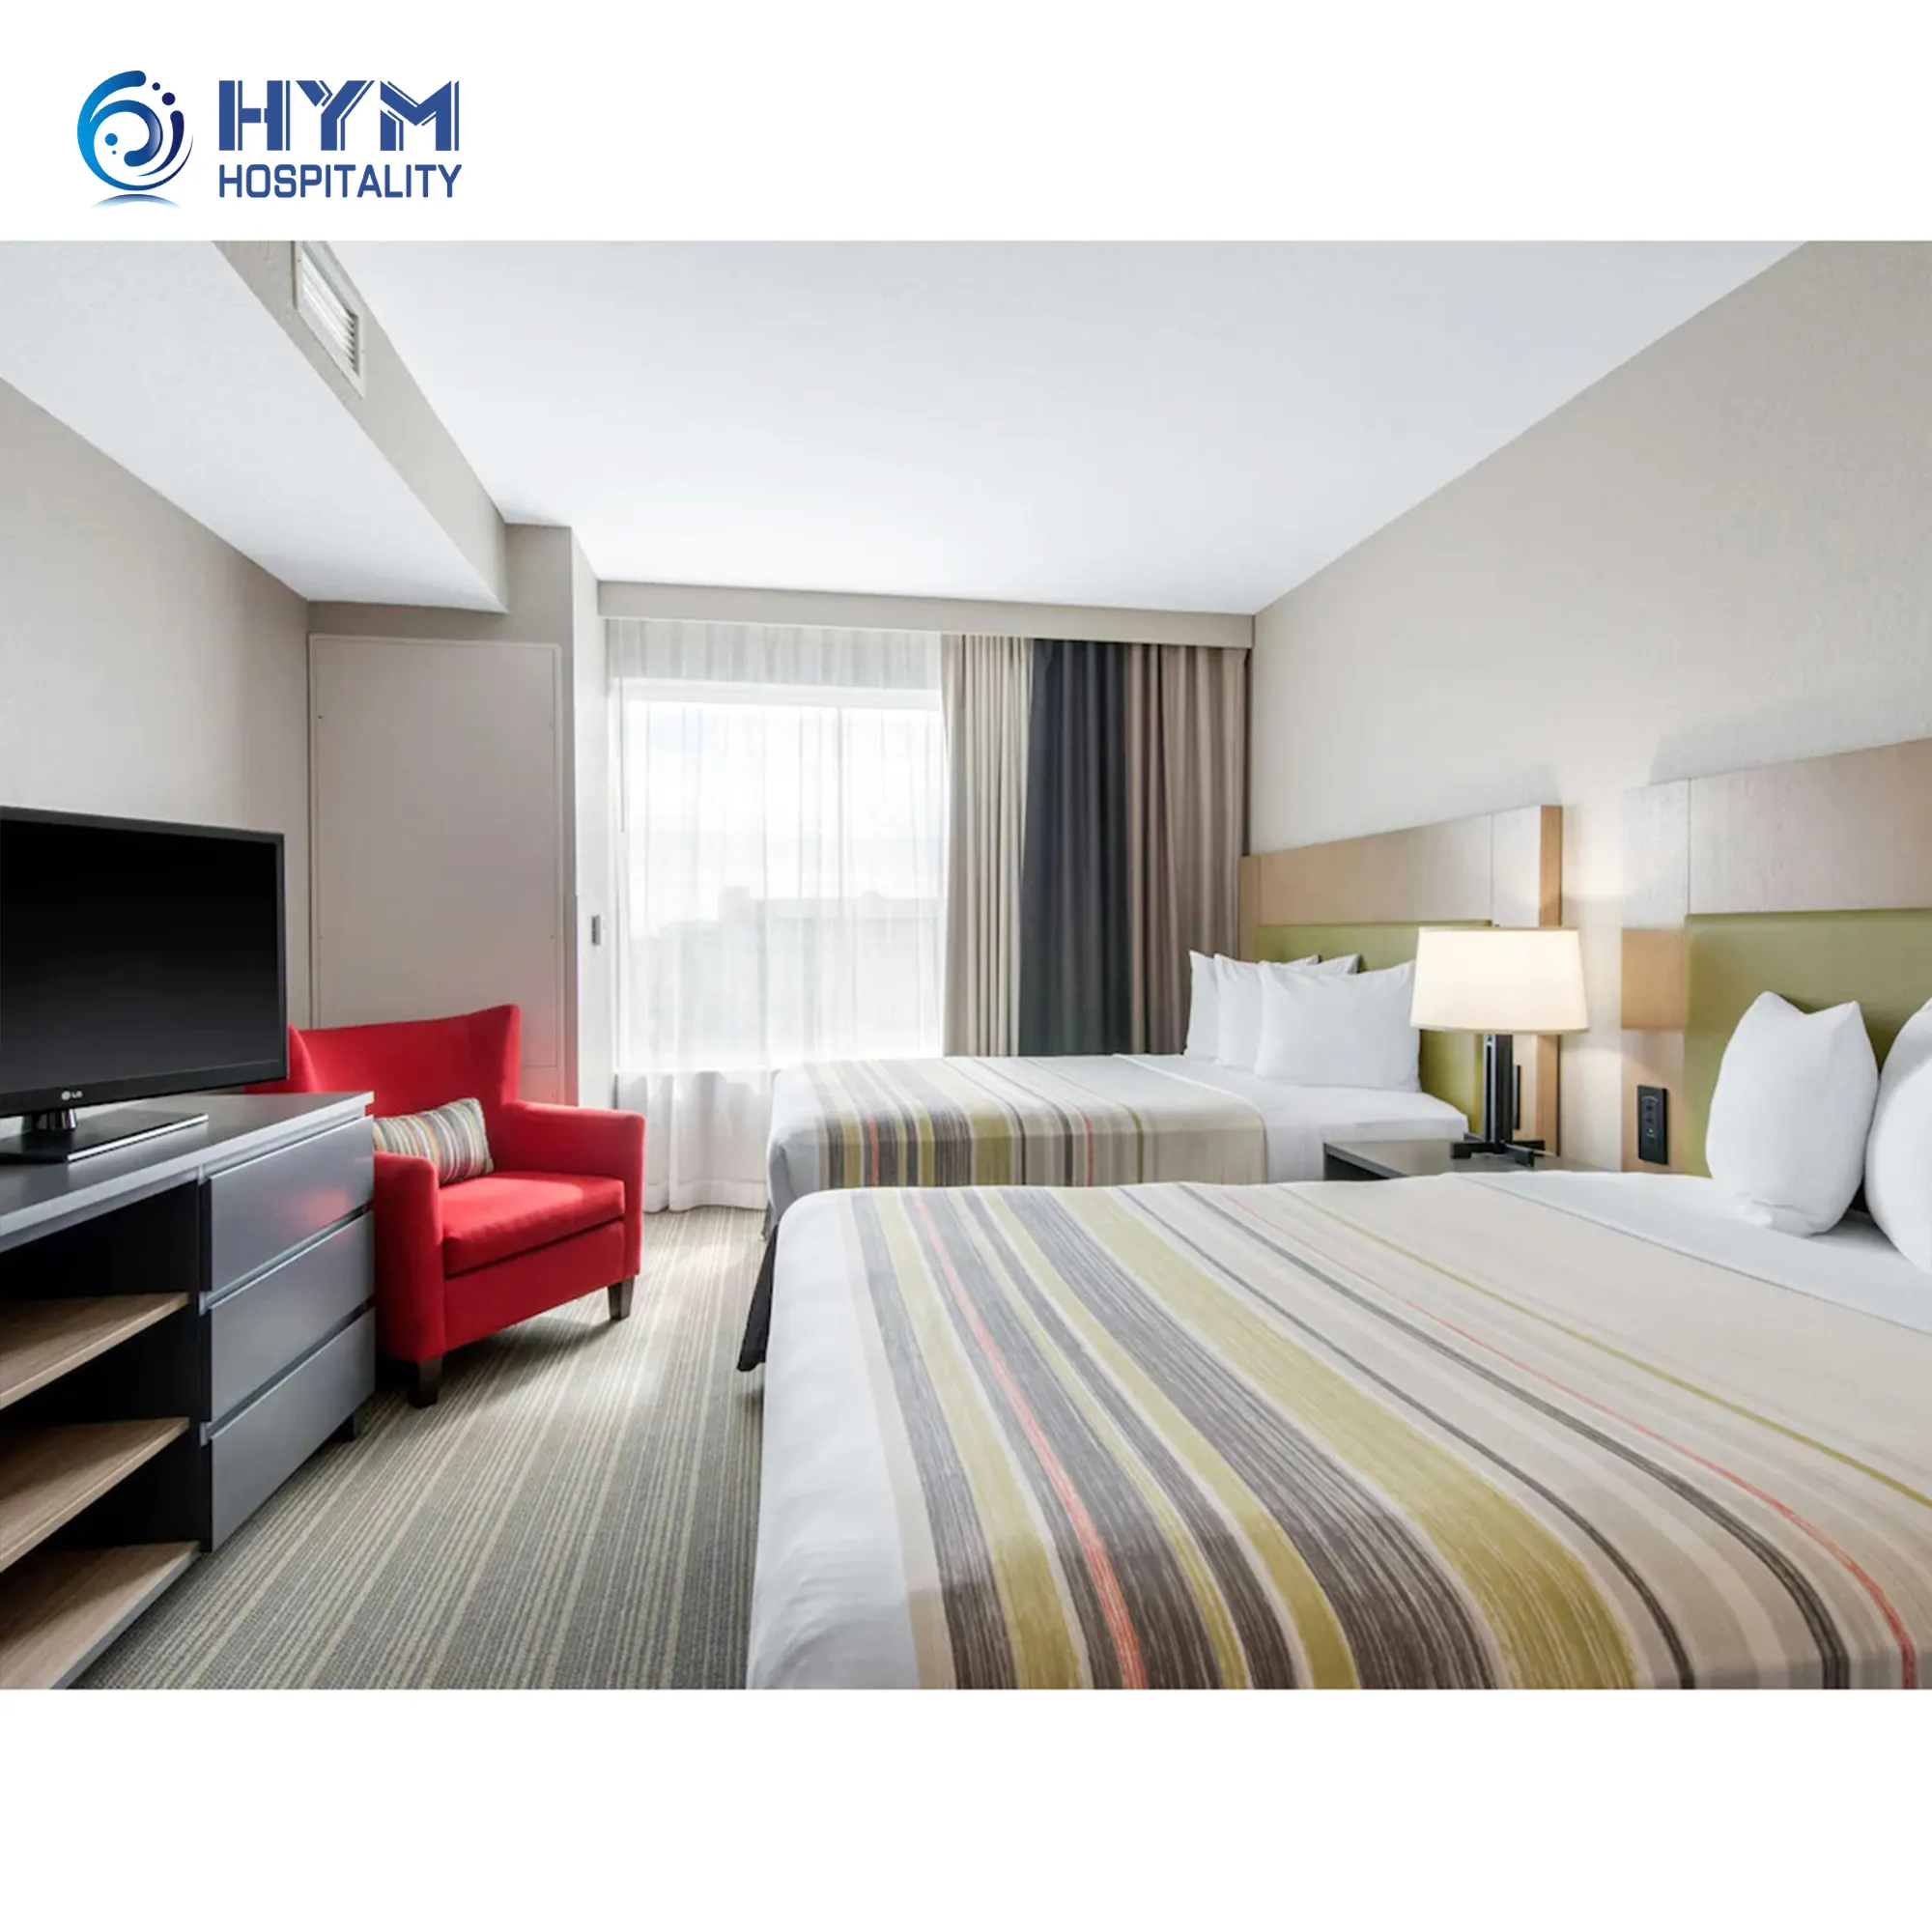 Hotel Bedroom Sets Design Country Inn Suites By Radisson Hotel Furniture Hotel Room Furniture Set